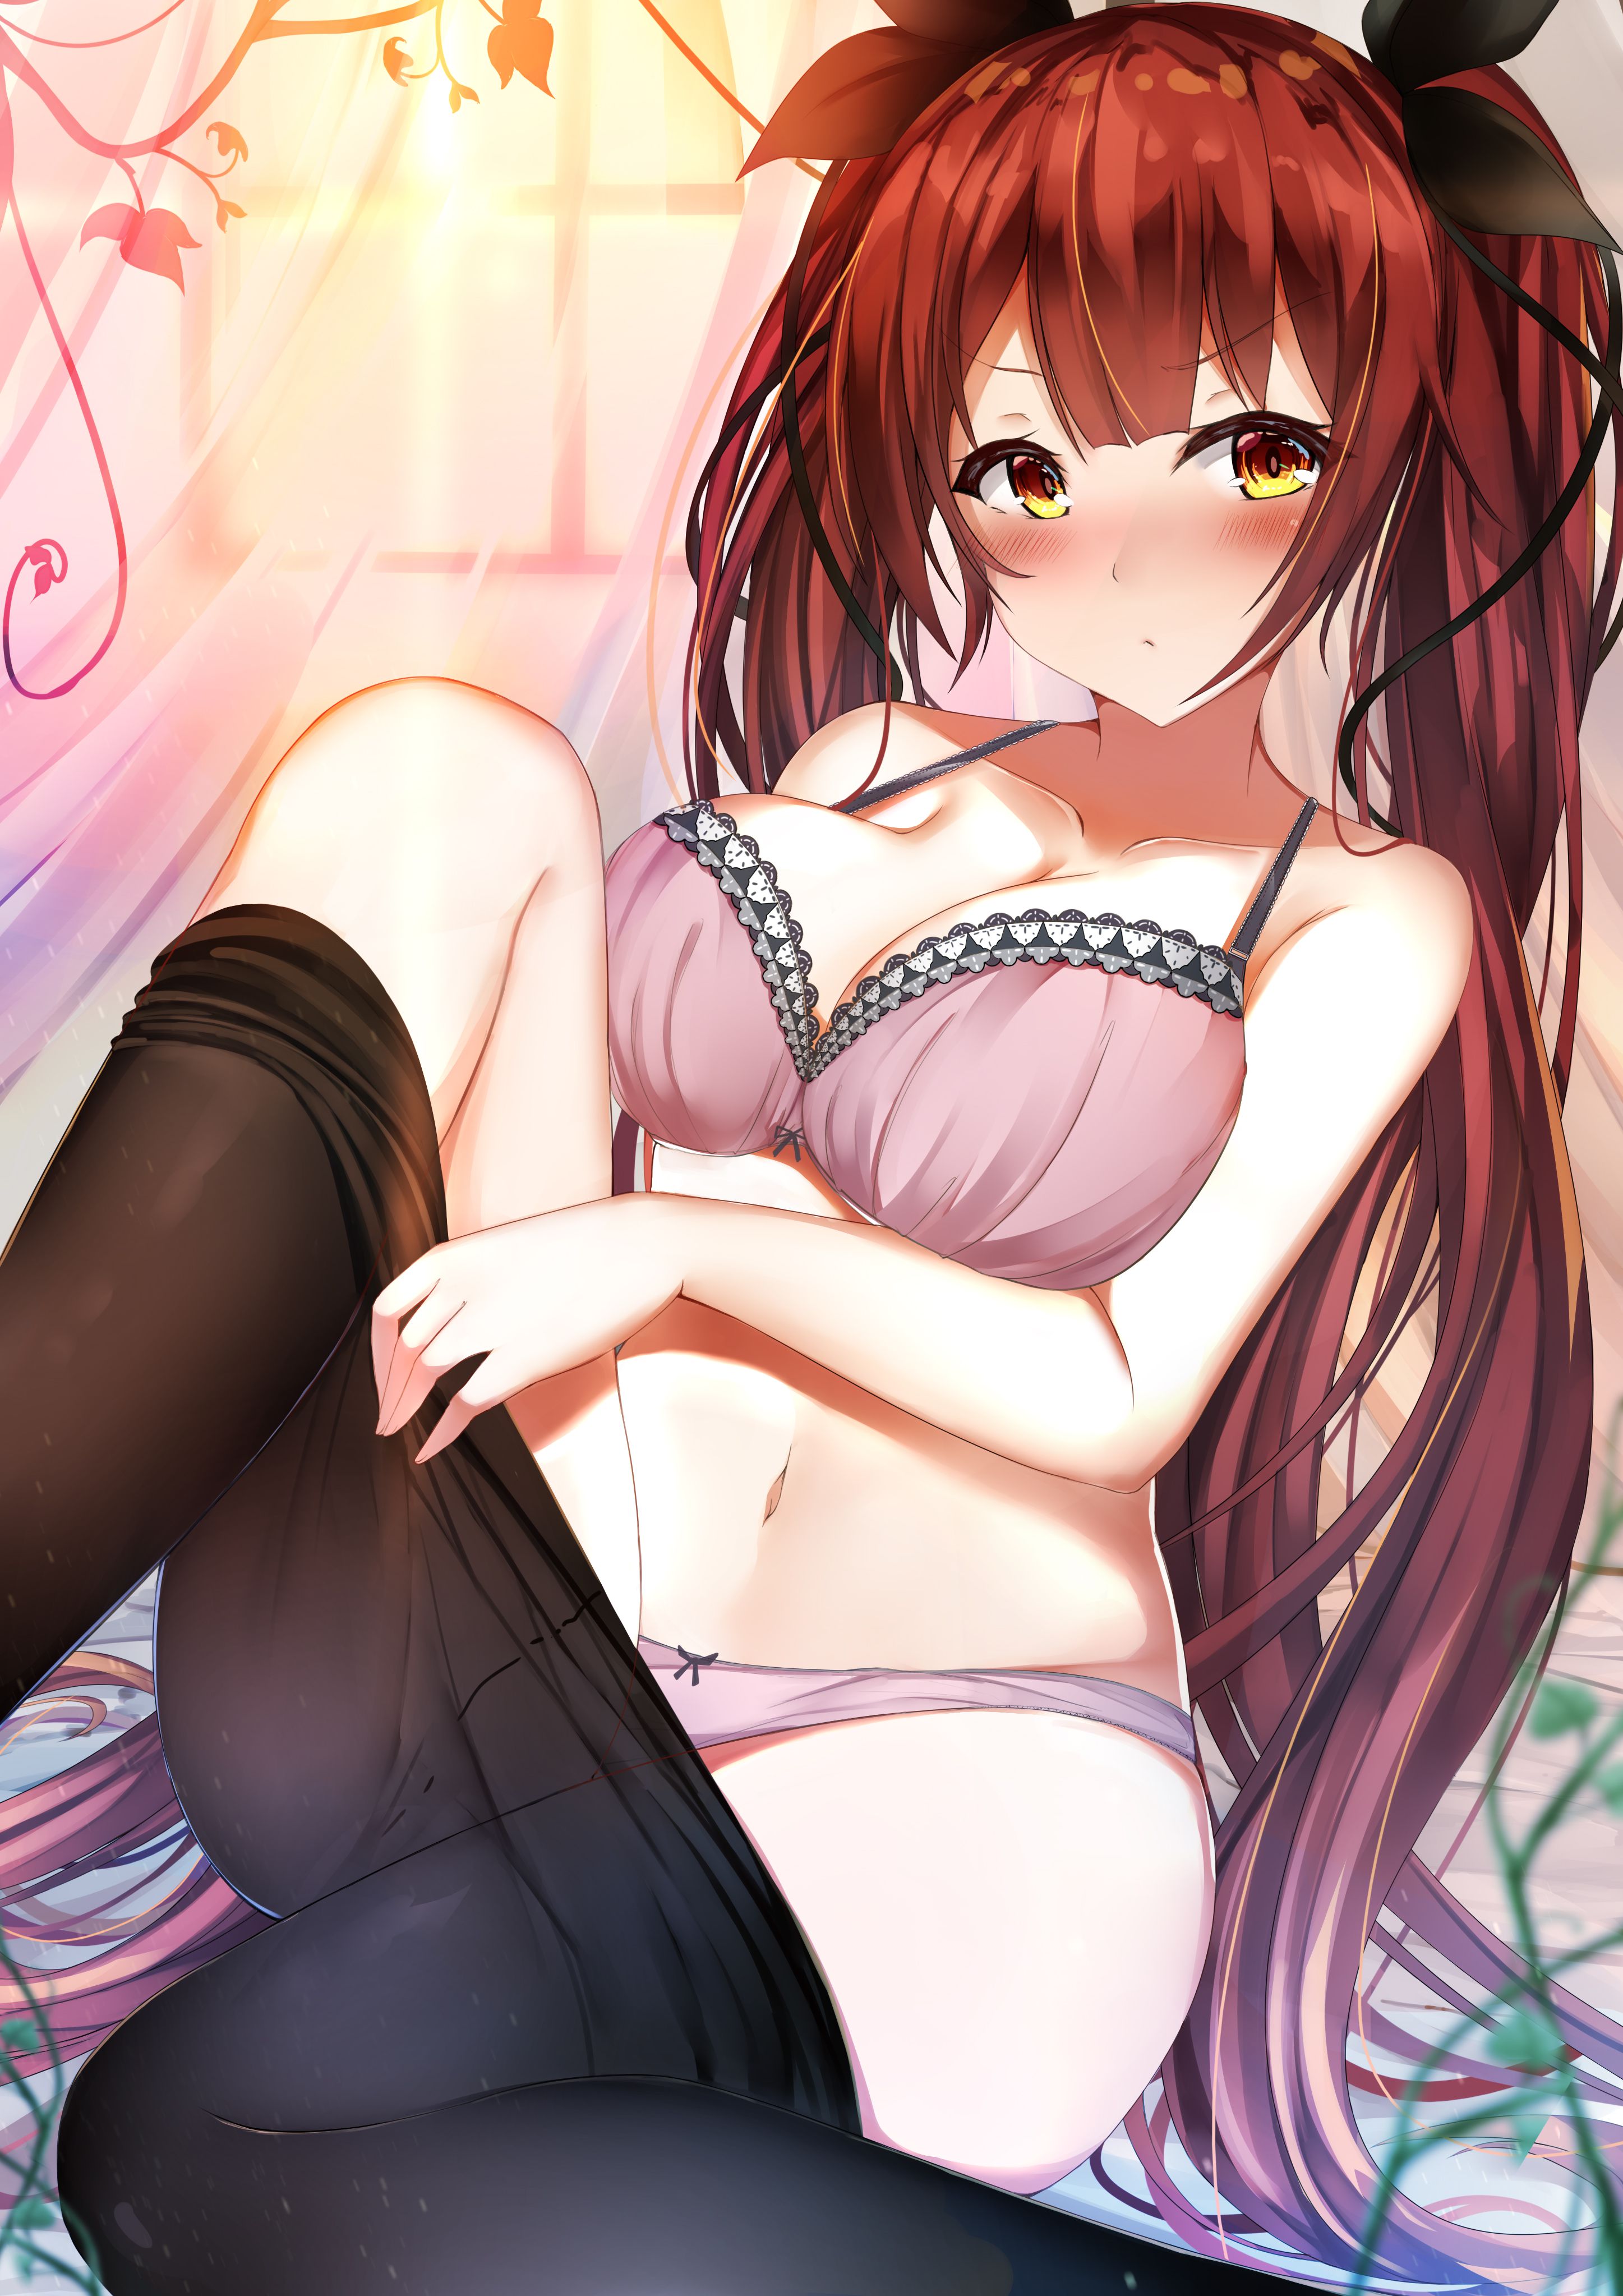 Erotic anime summary erotic images of beautiful girls wearing erotic underwear [50 pieces] 26